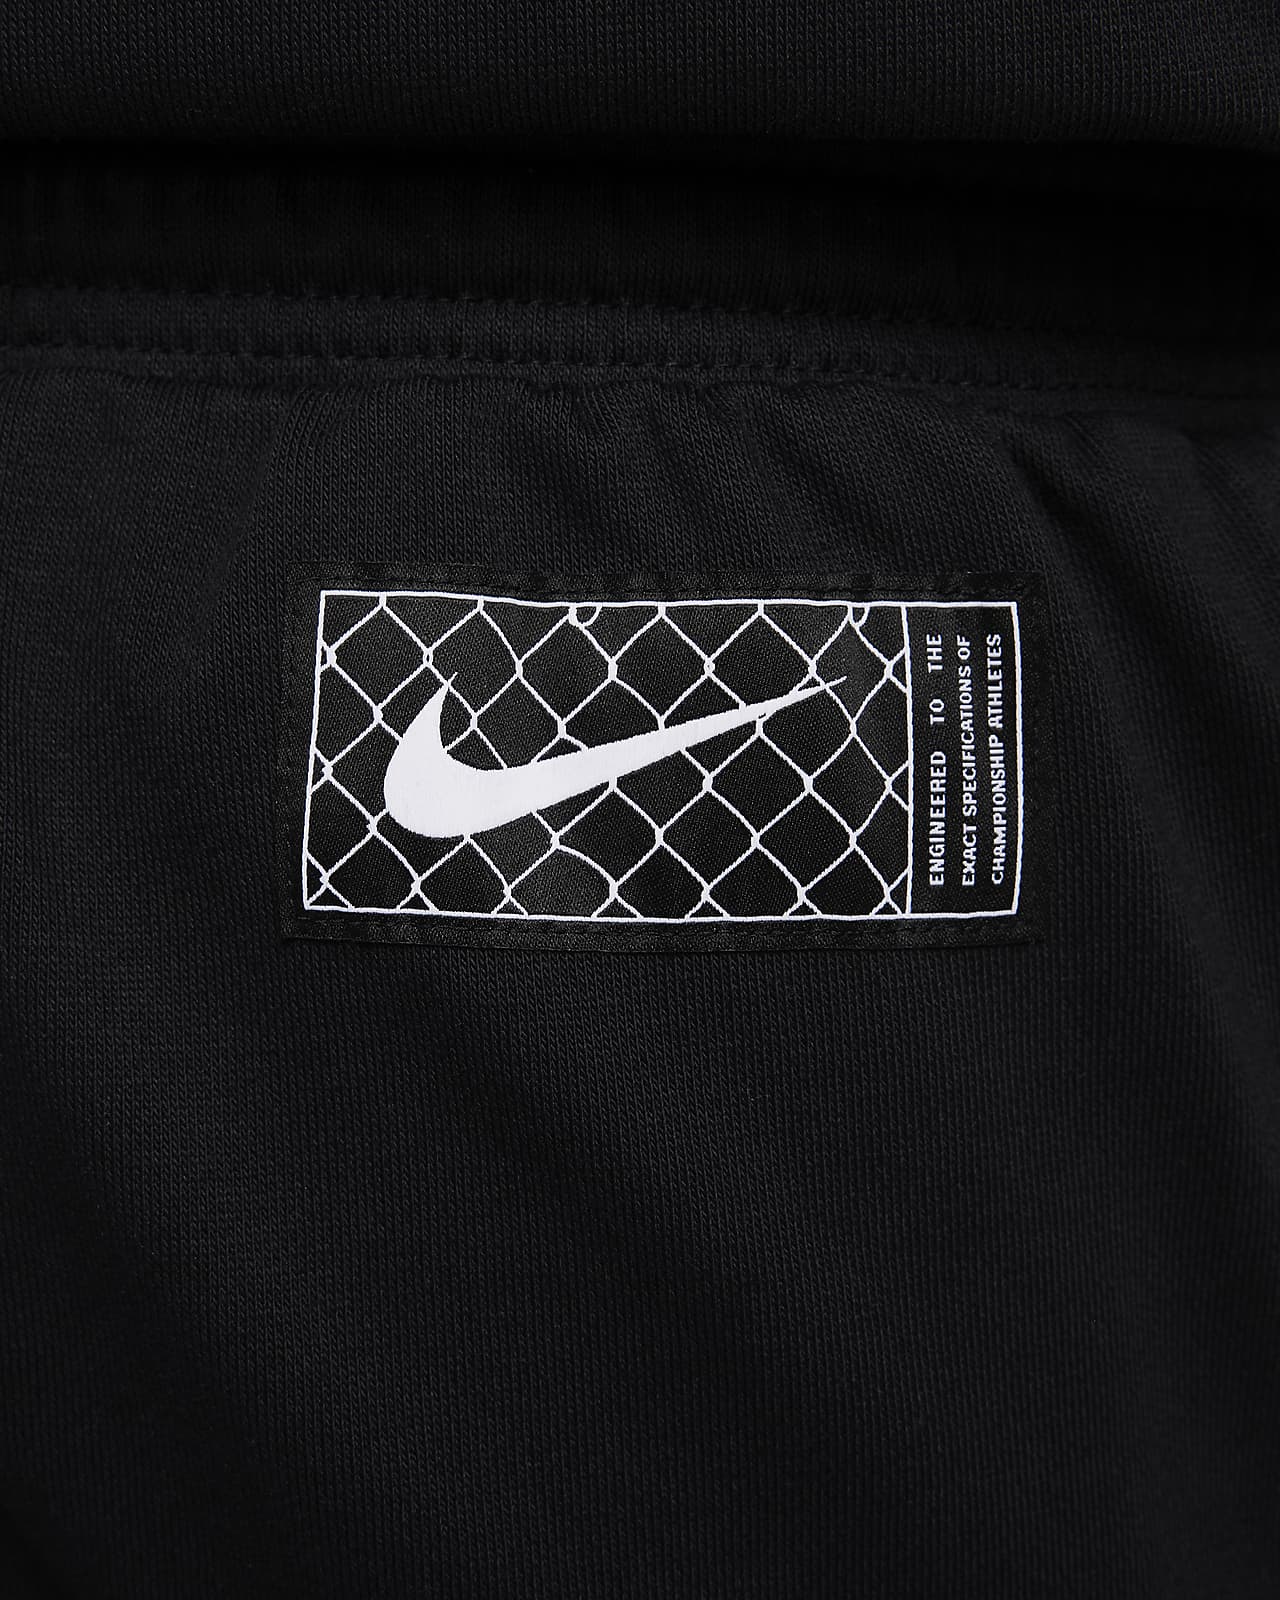 Nike Men's Lightweight Basketball Pants